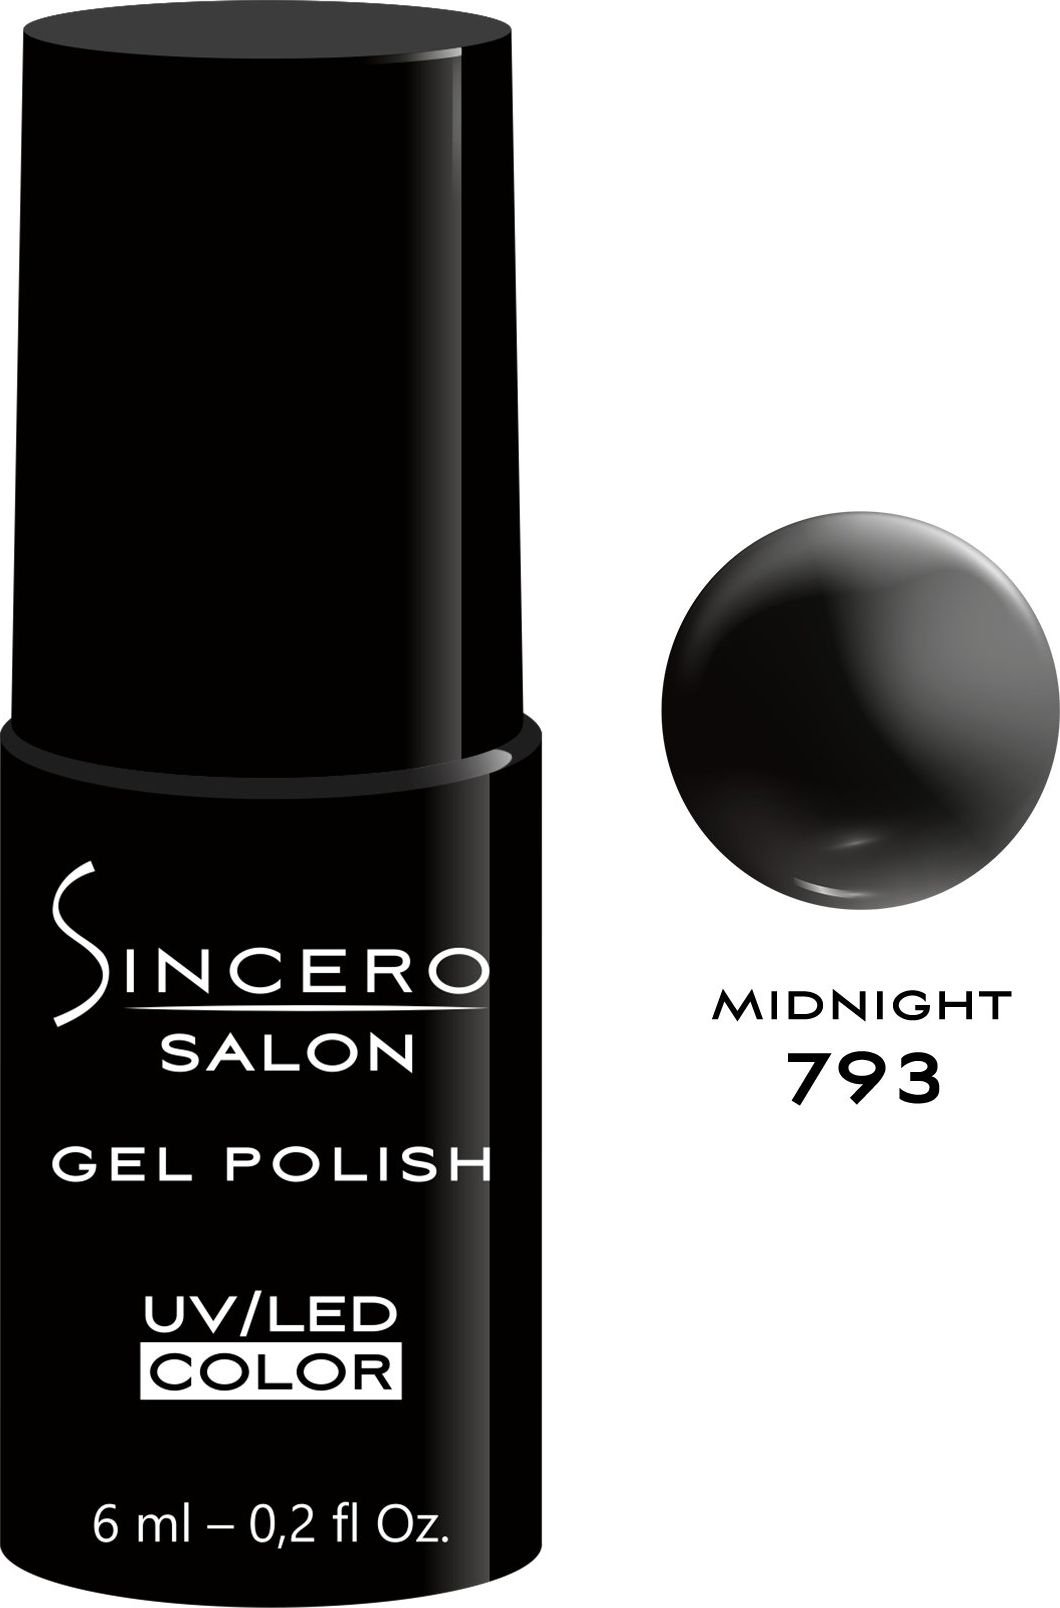 Sincero Salon Gel Polish UV/LED 793 Midnight 6ml